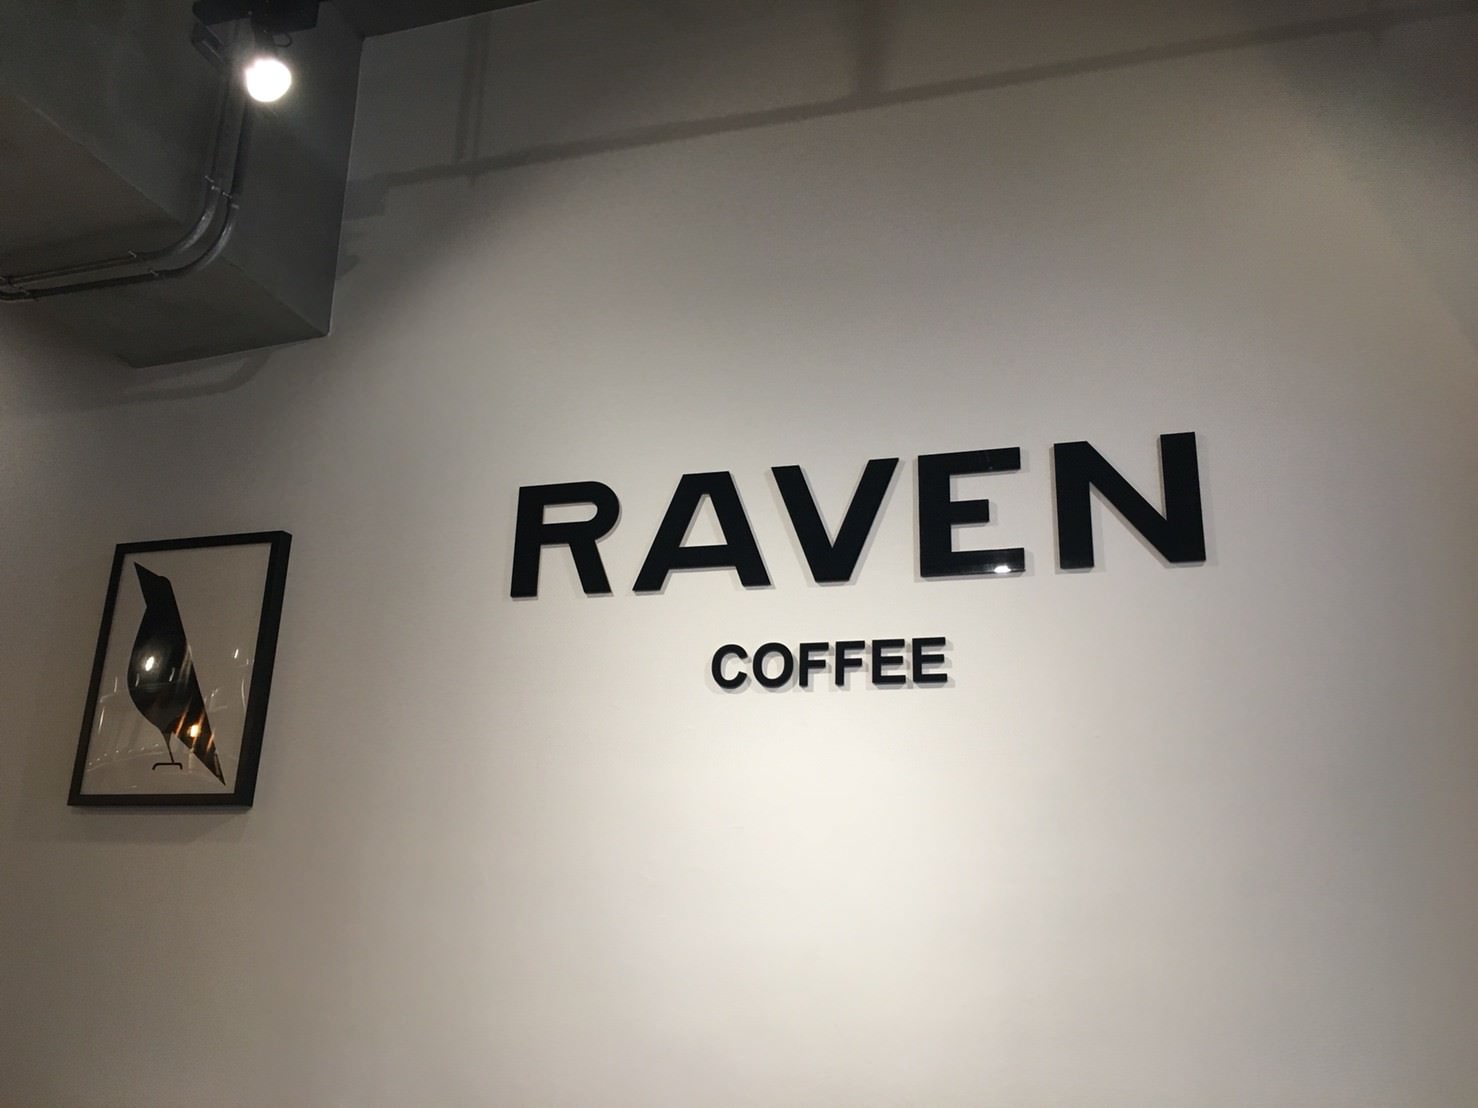 Raven coffee